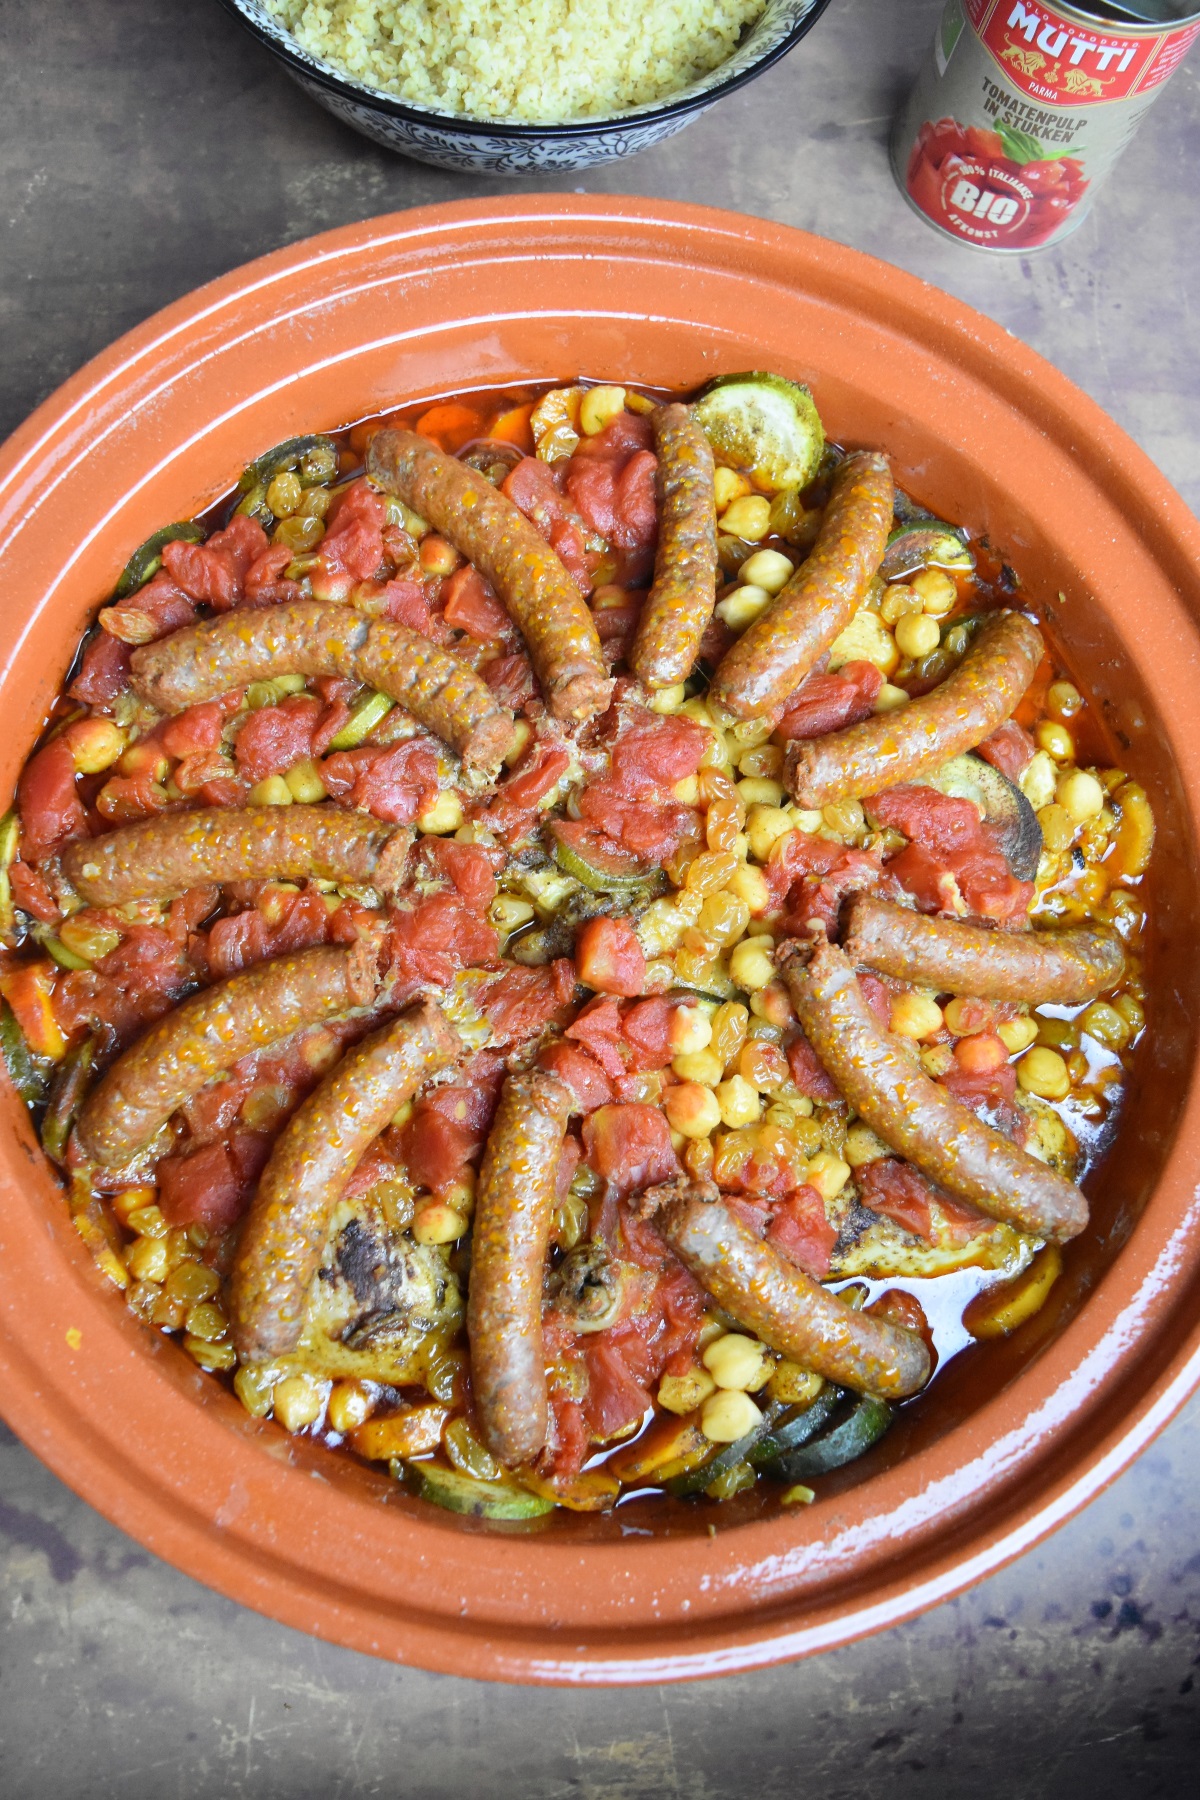 Apprenez à cuisiner une délicieuse tajine marocaine